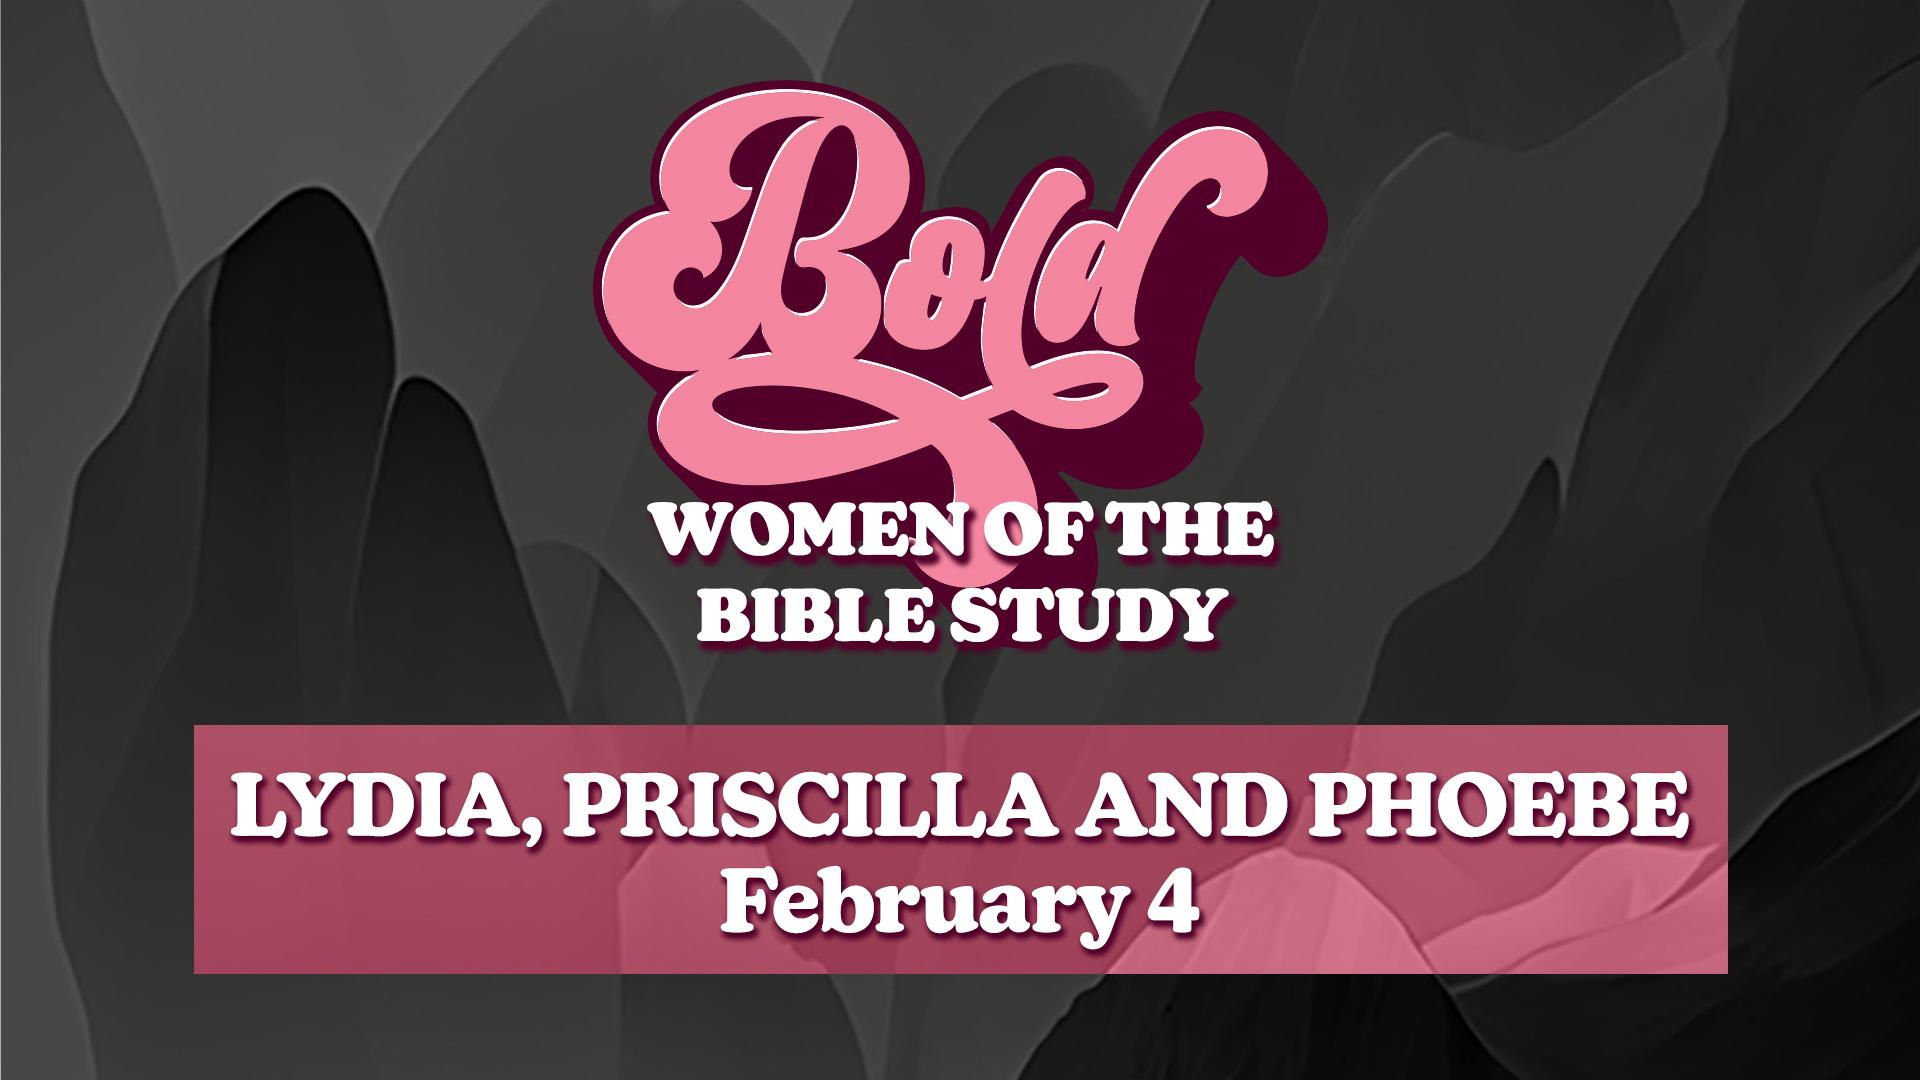 Women of the Bible study